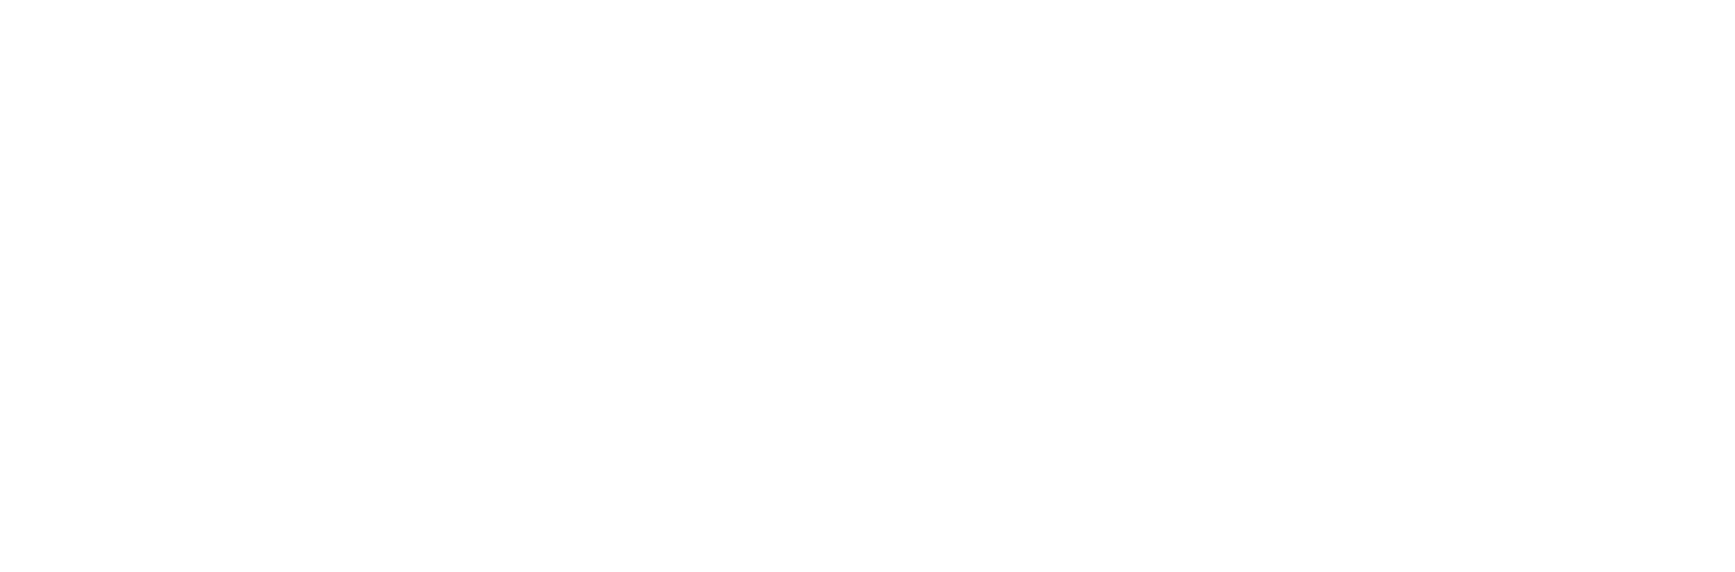 Reims Conservatoire logo.